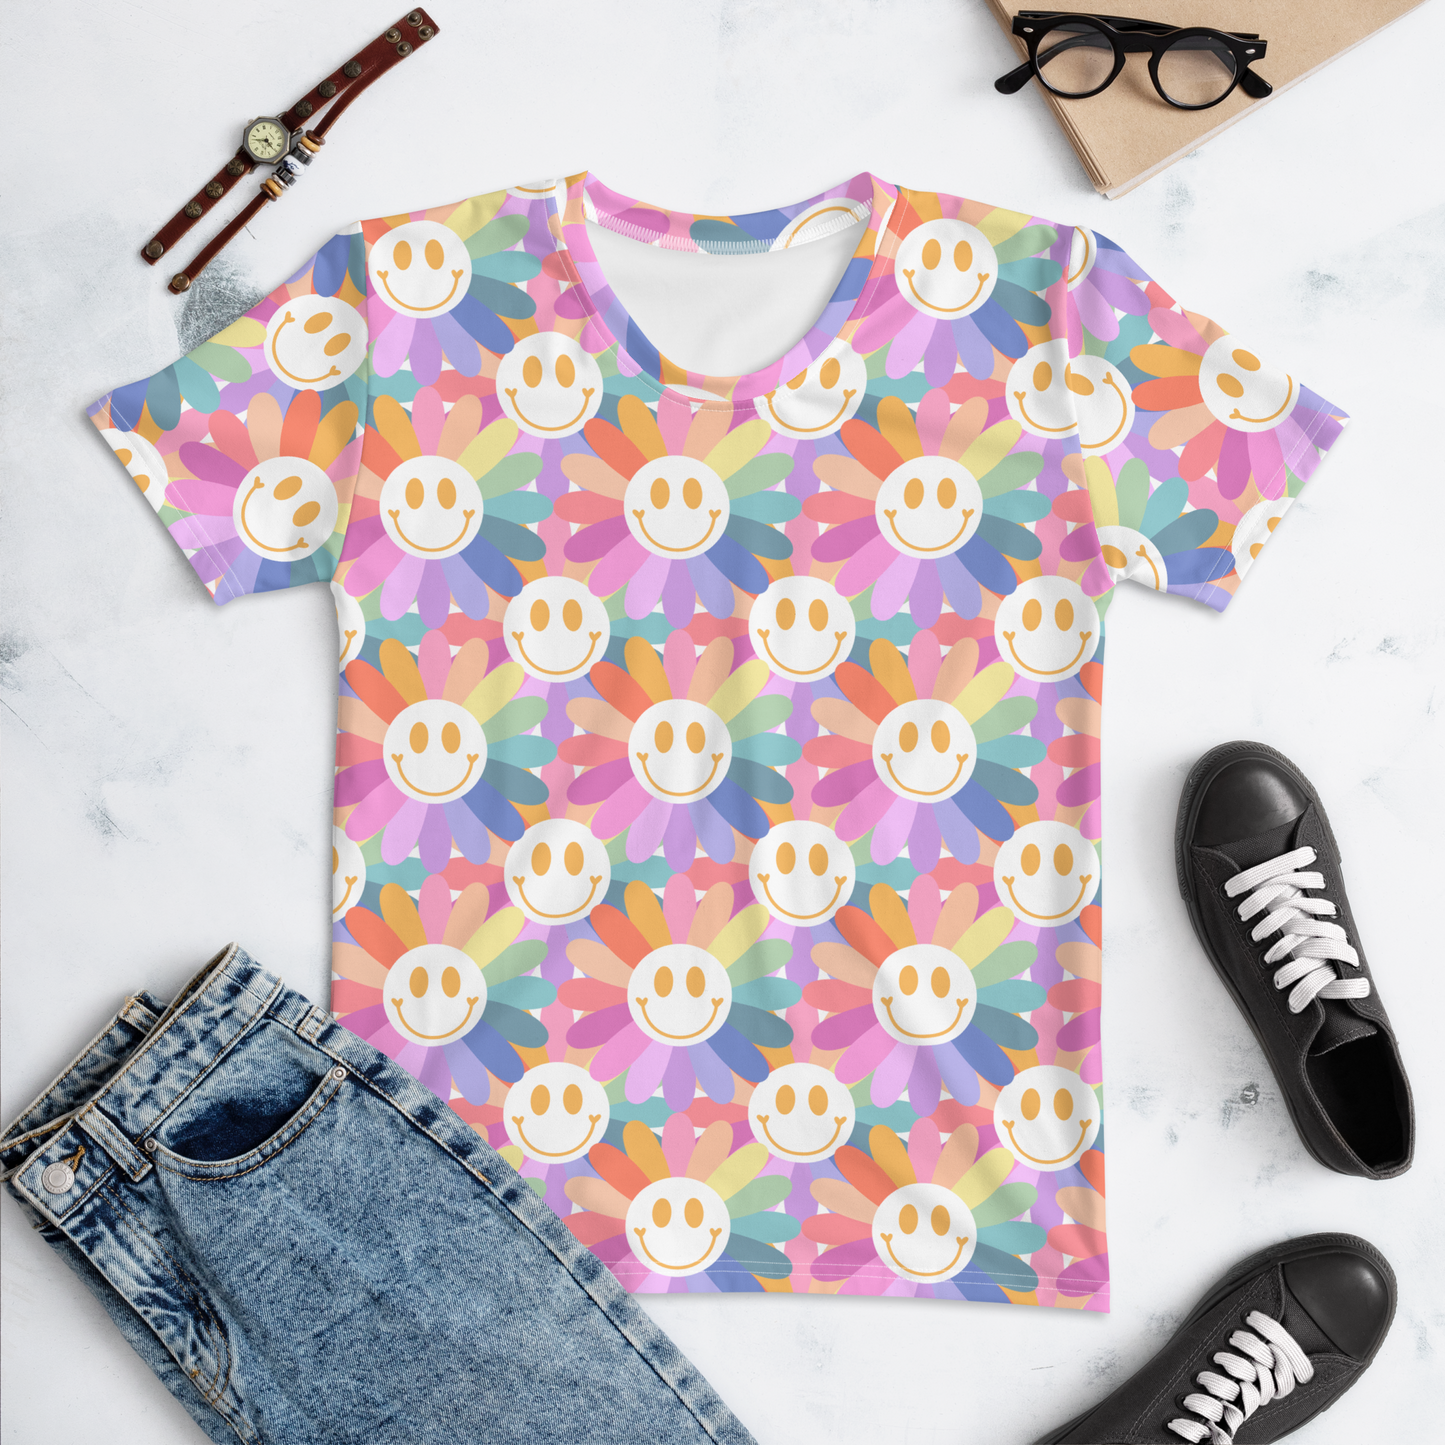 Rainbow Flower Women's T-shirt